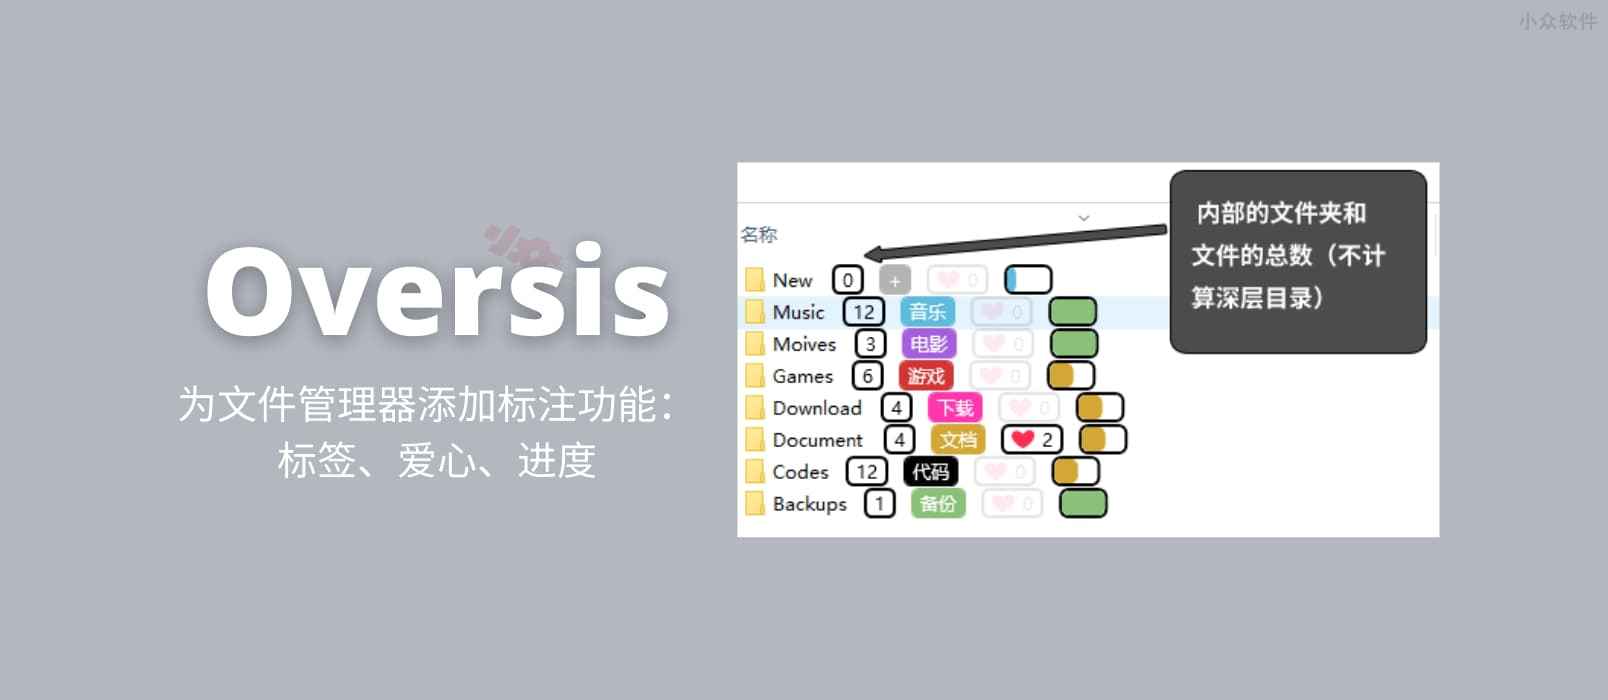 Oversis - 为文件管理器添加文件标注功能：标签、爱心、进度[Windows]